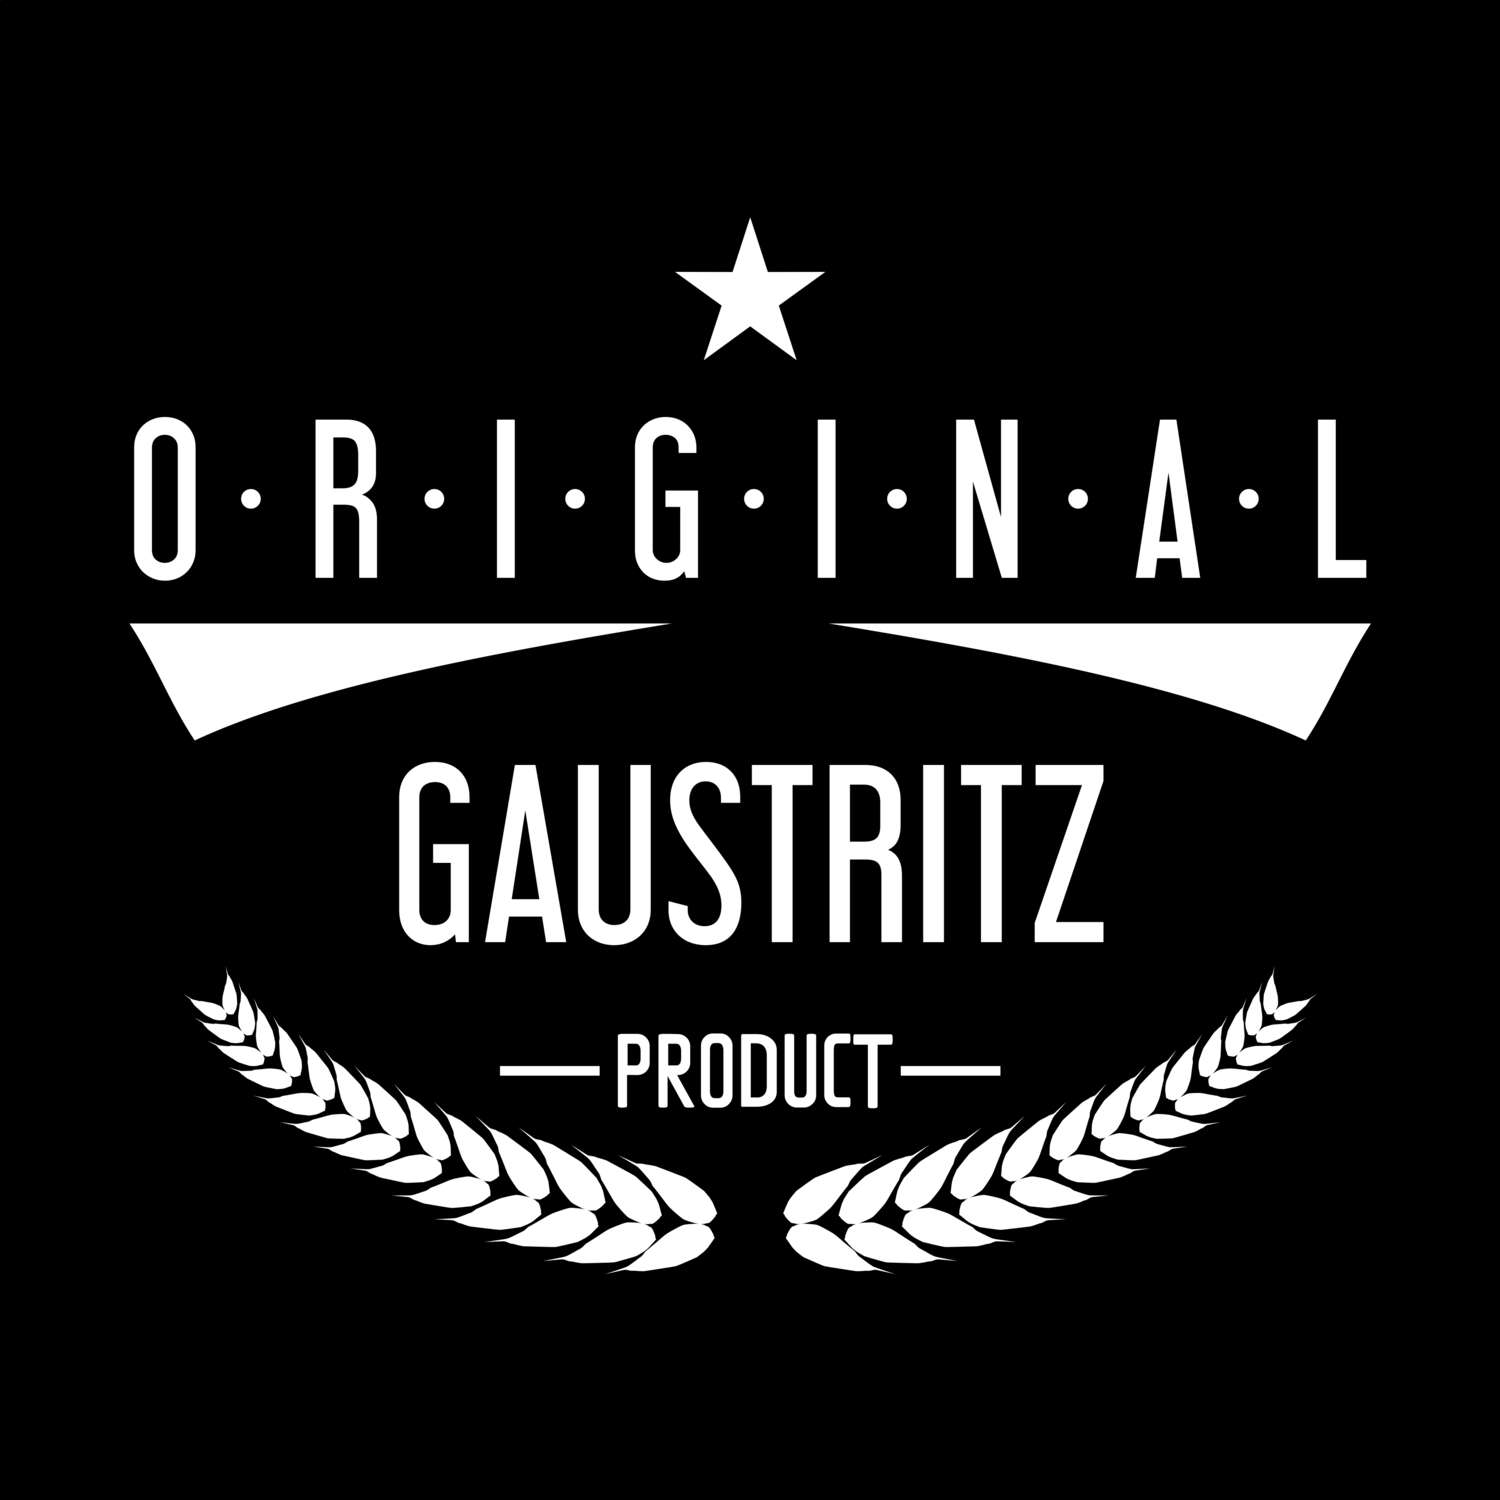 Gaustritz T-Shirt »Original Product«